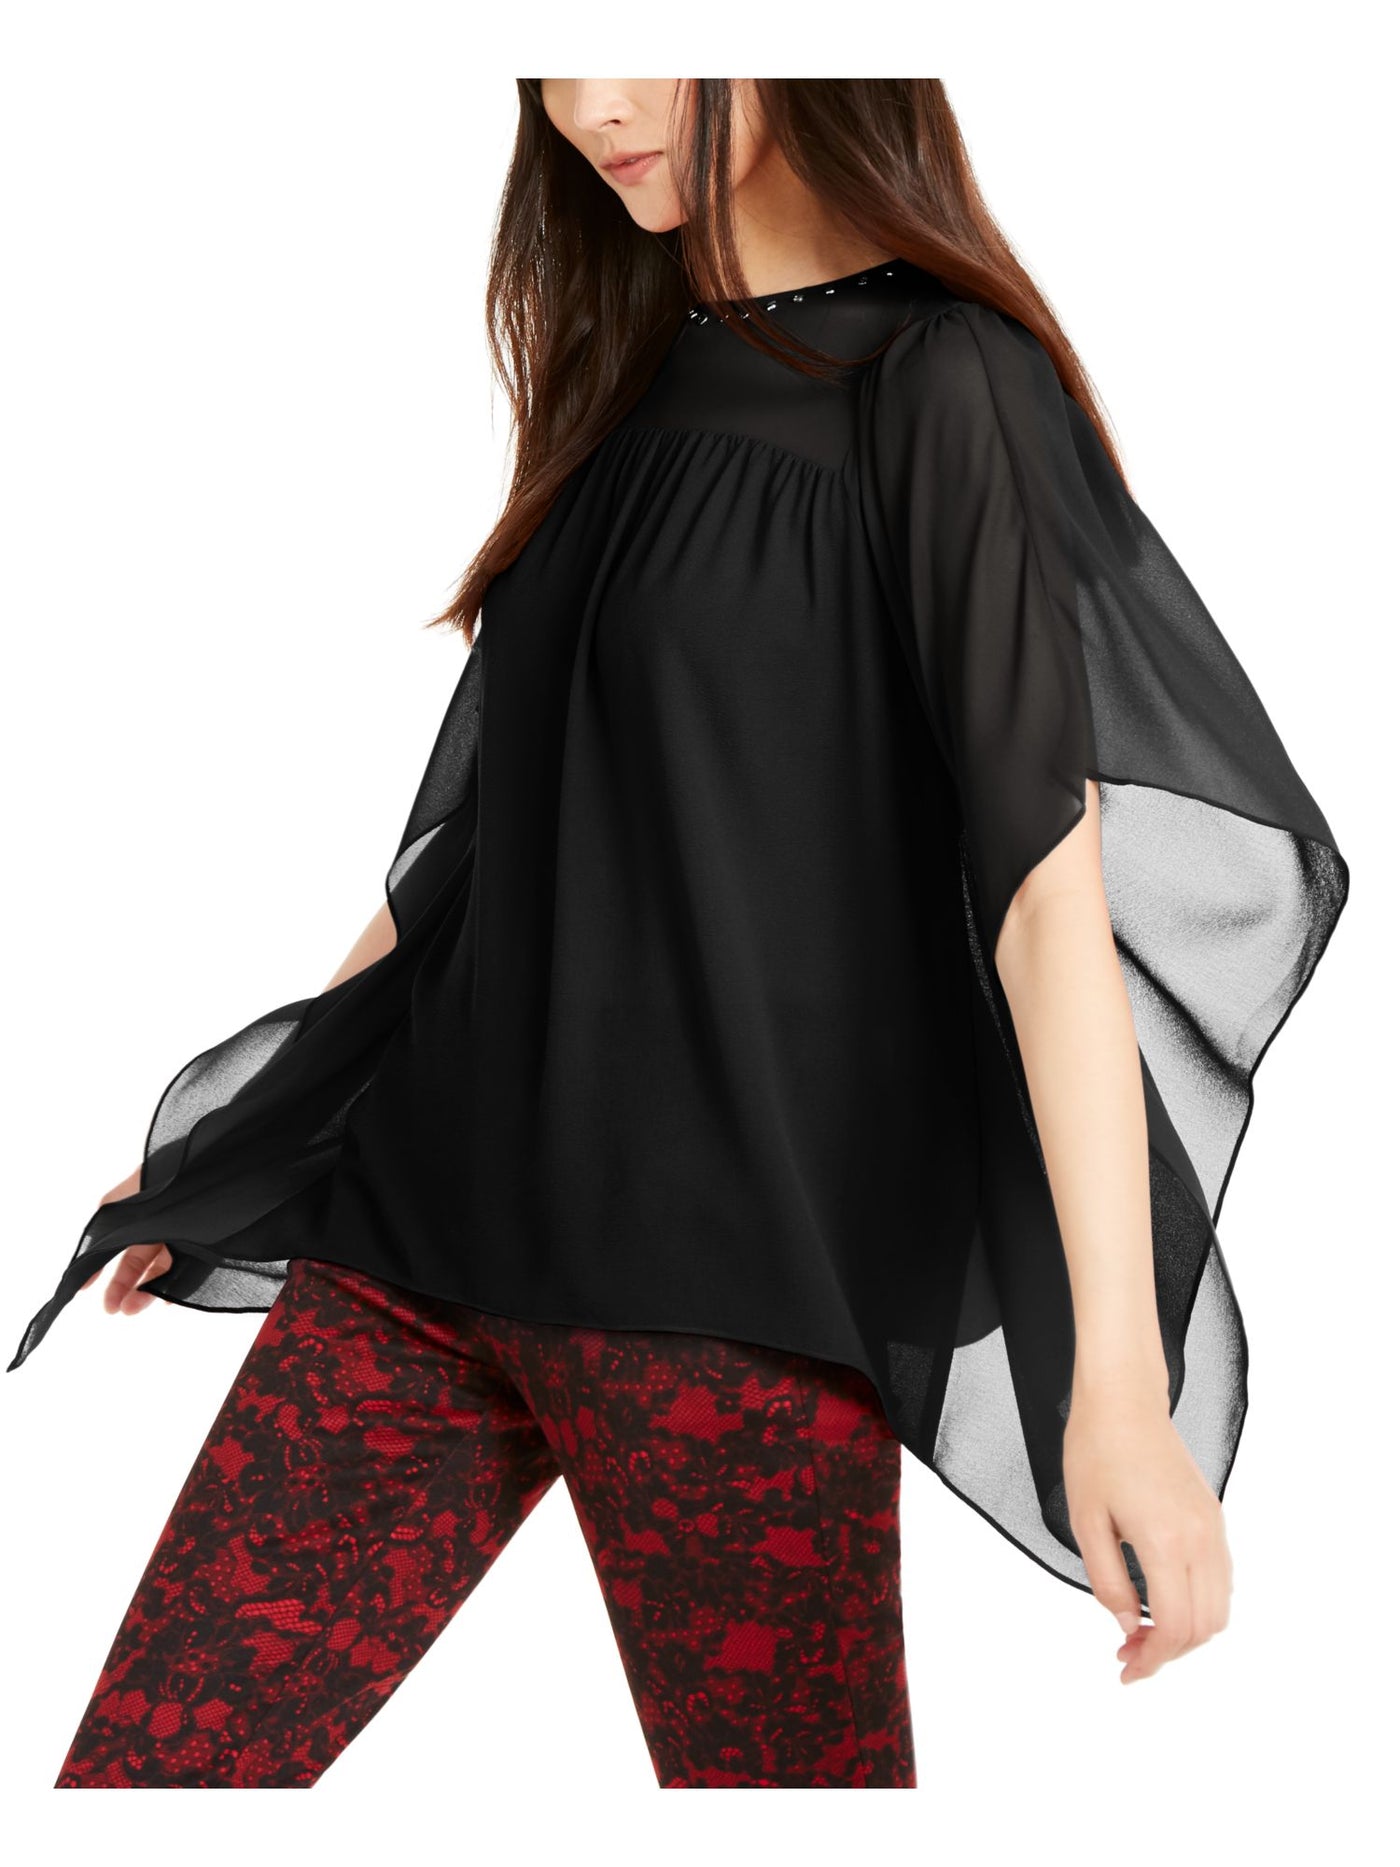 MICHAEL KORS Womens Black Embellished Sheer Bell Sleeve Jewel Neck Top XXS